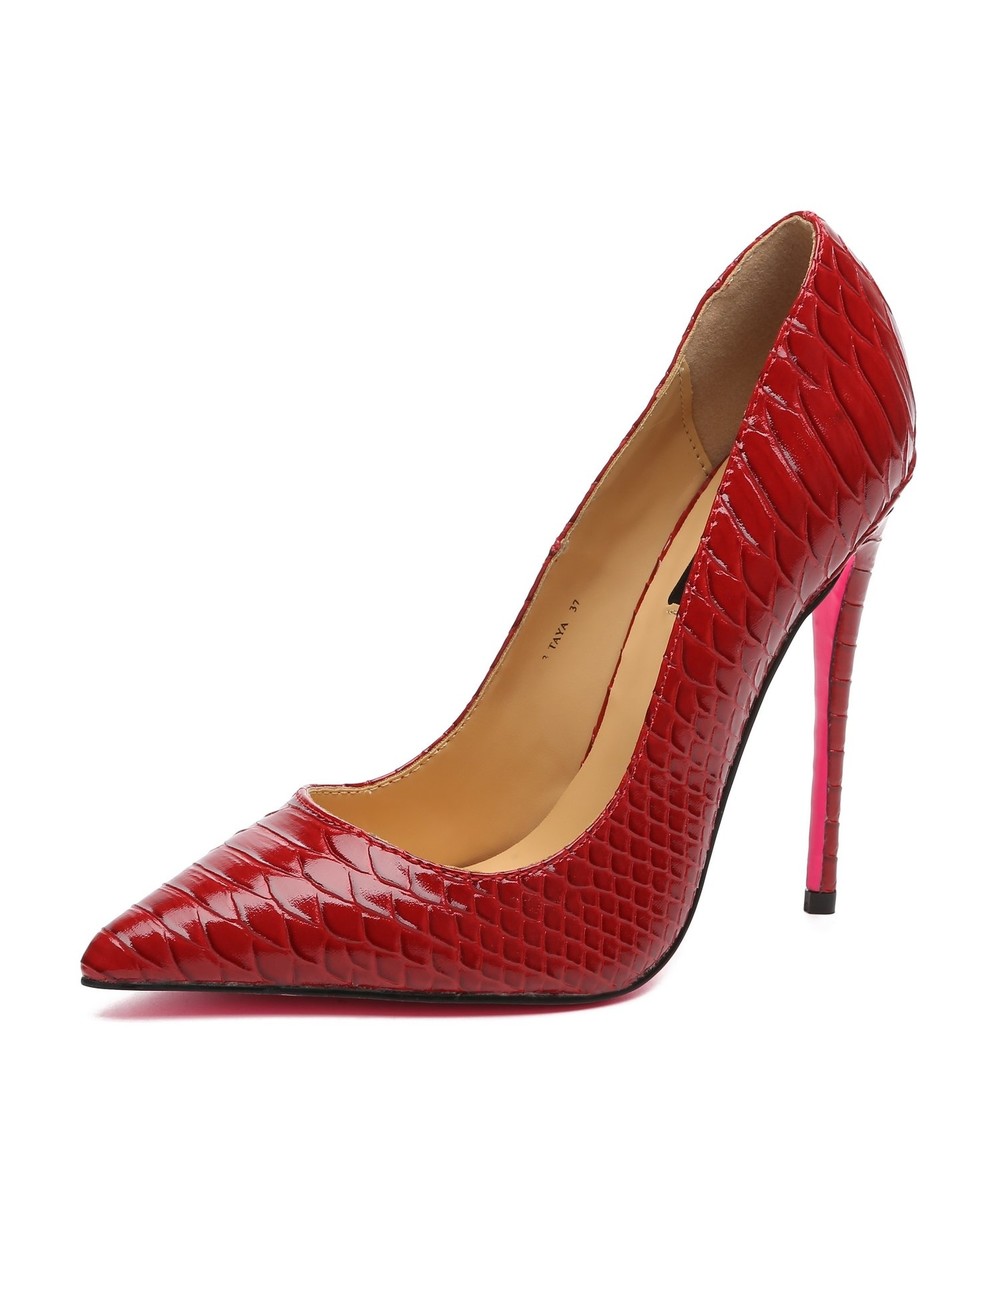 Giaro TAYA RED SNAKE PUMPS - Shoebidoo Shoes | Giaro high heels